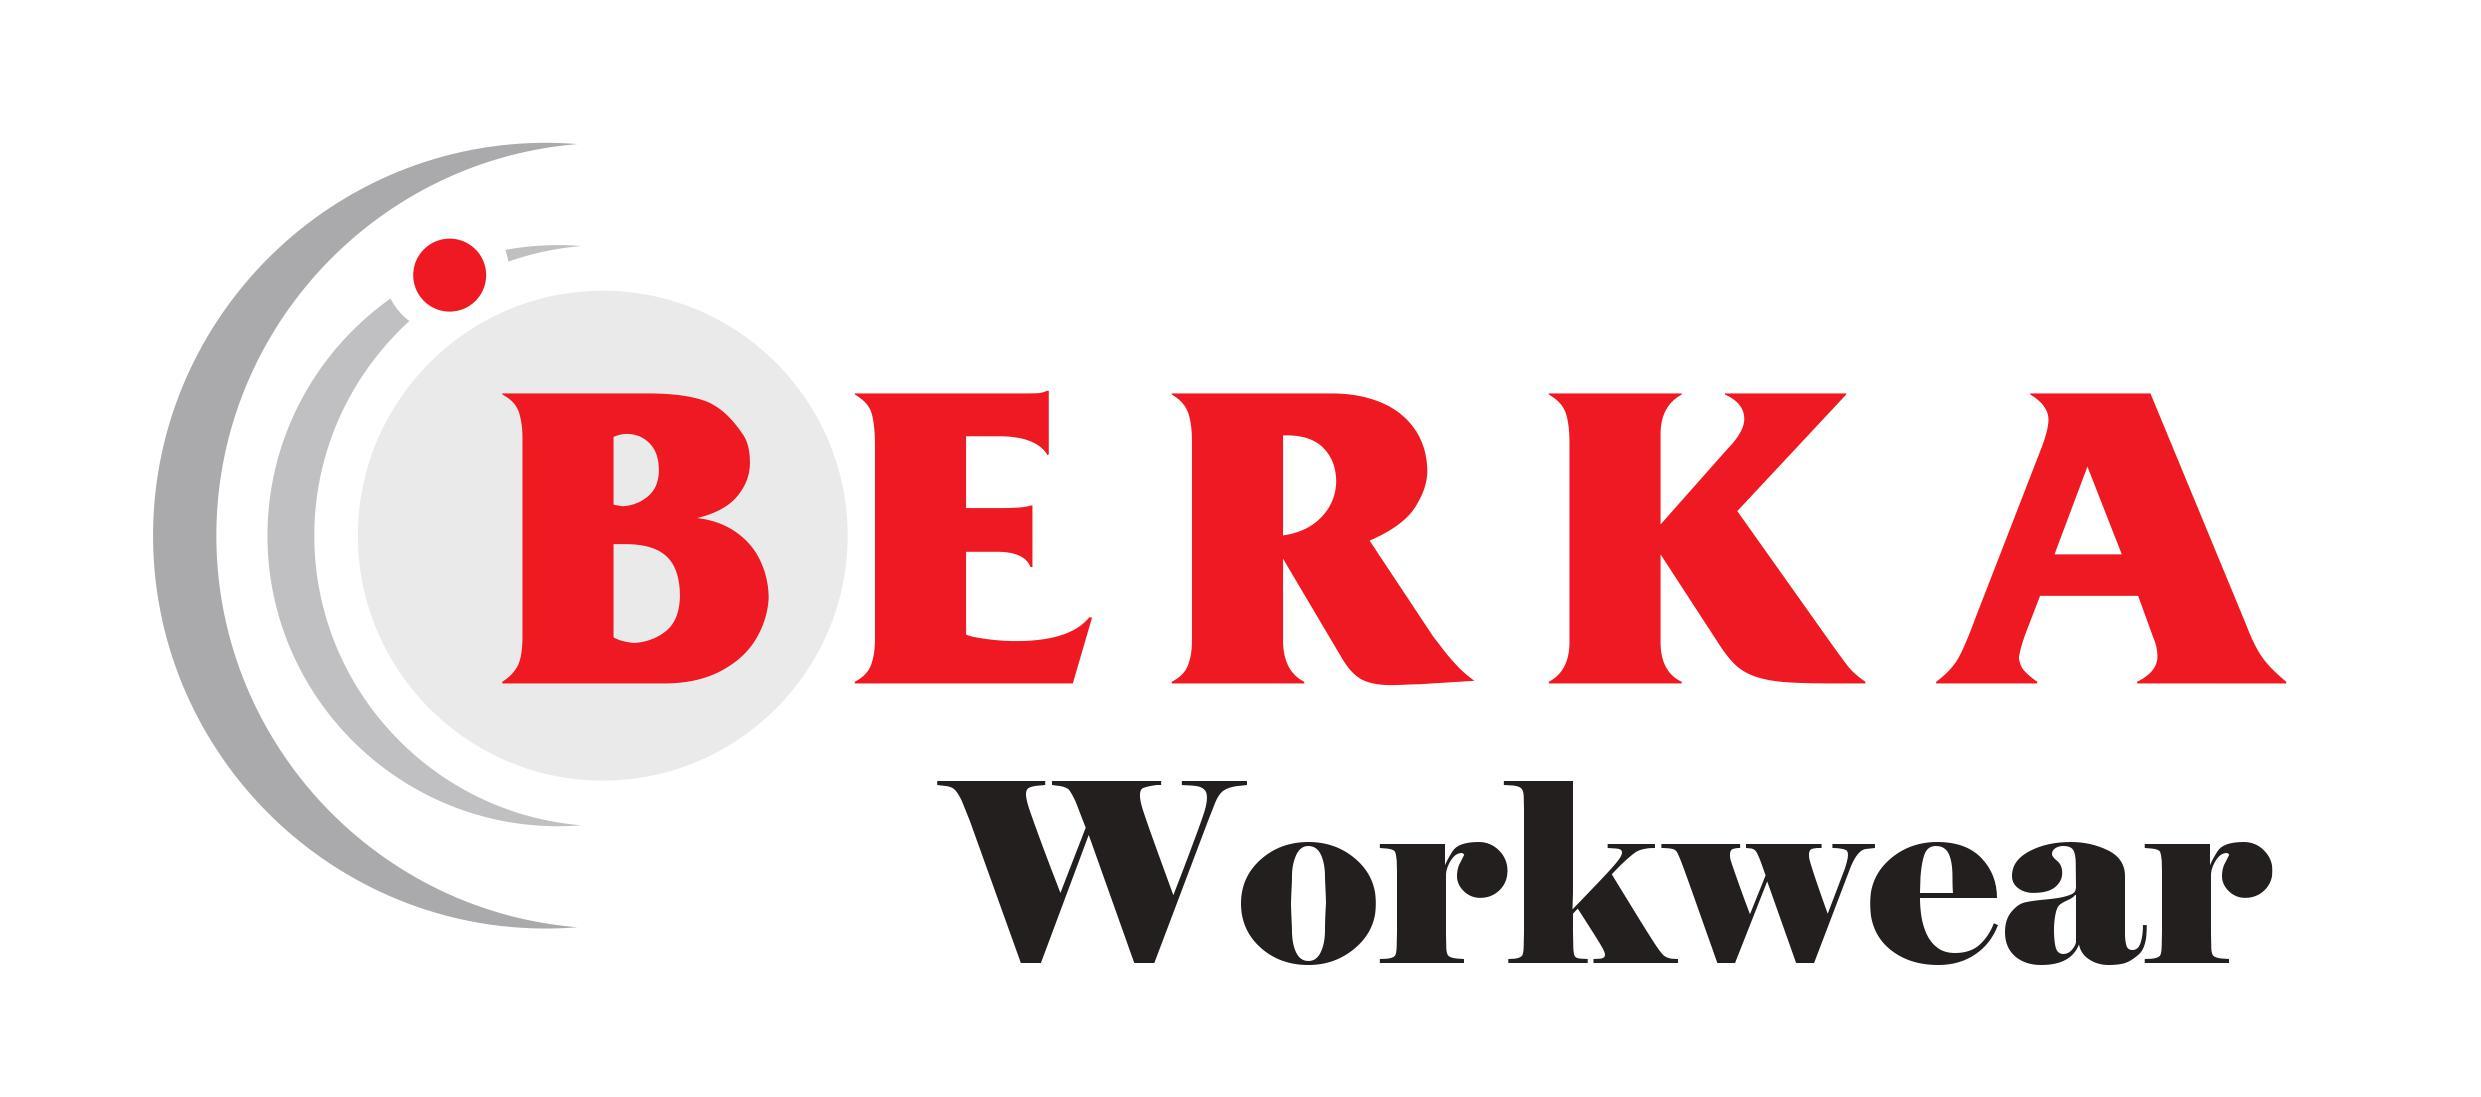 Berka Workwear